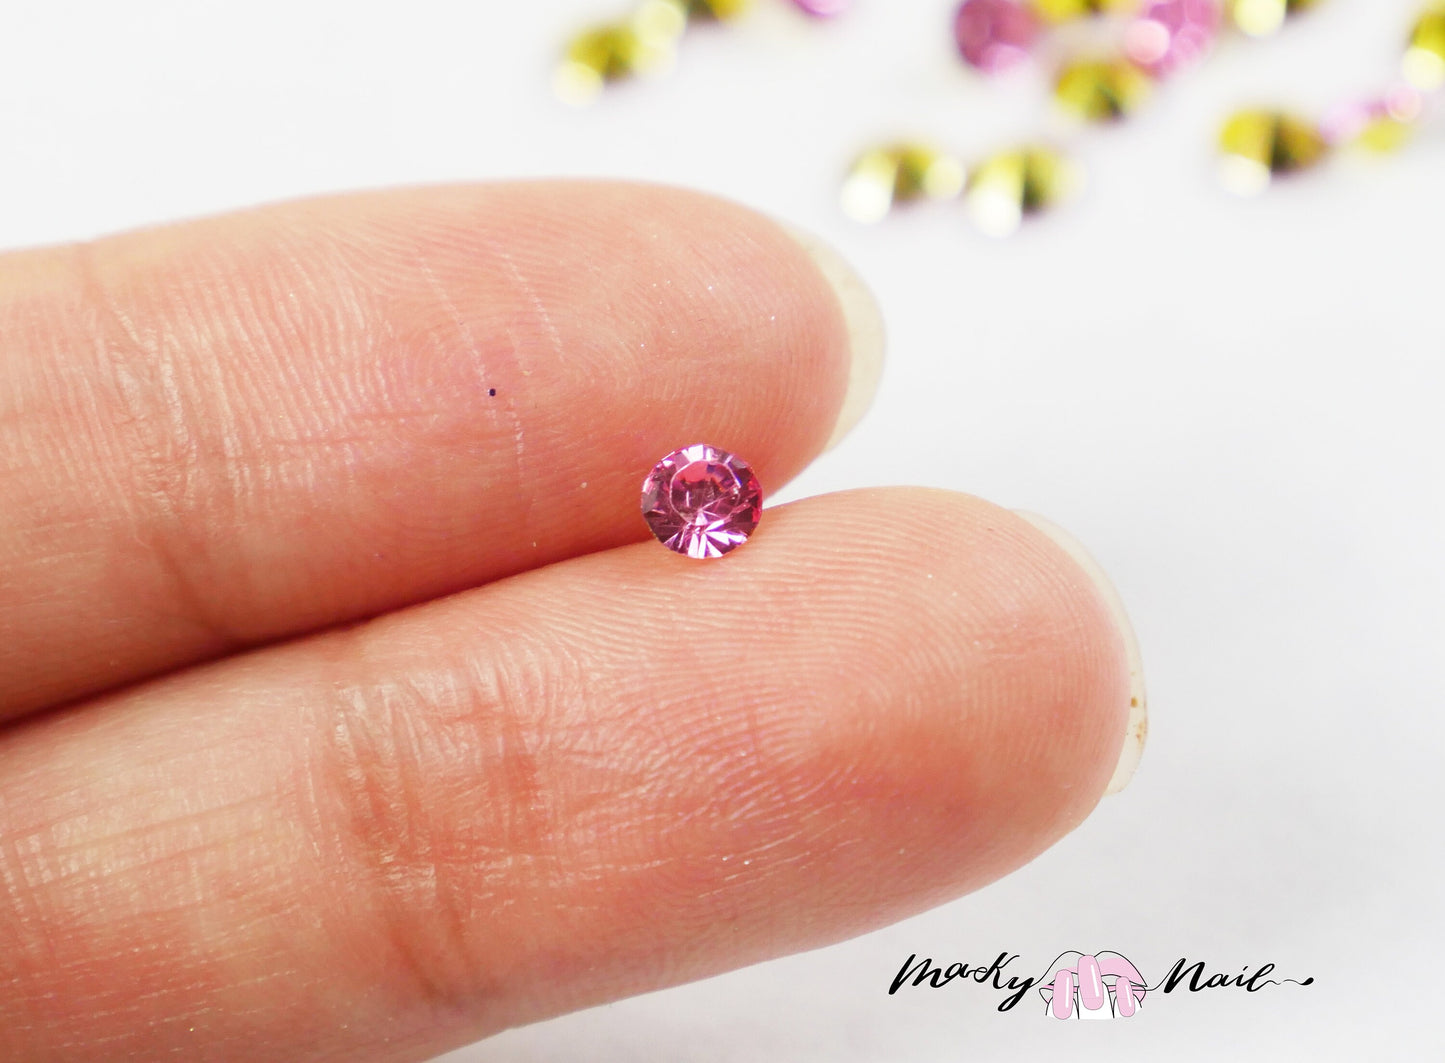 Culet Diamond crystal Nail supply gem stone glitter/ Nail design art decoration rhinestones 